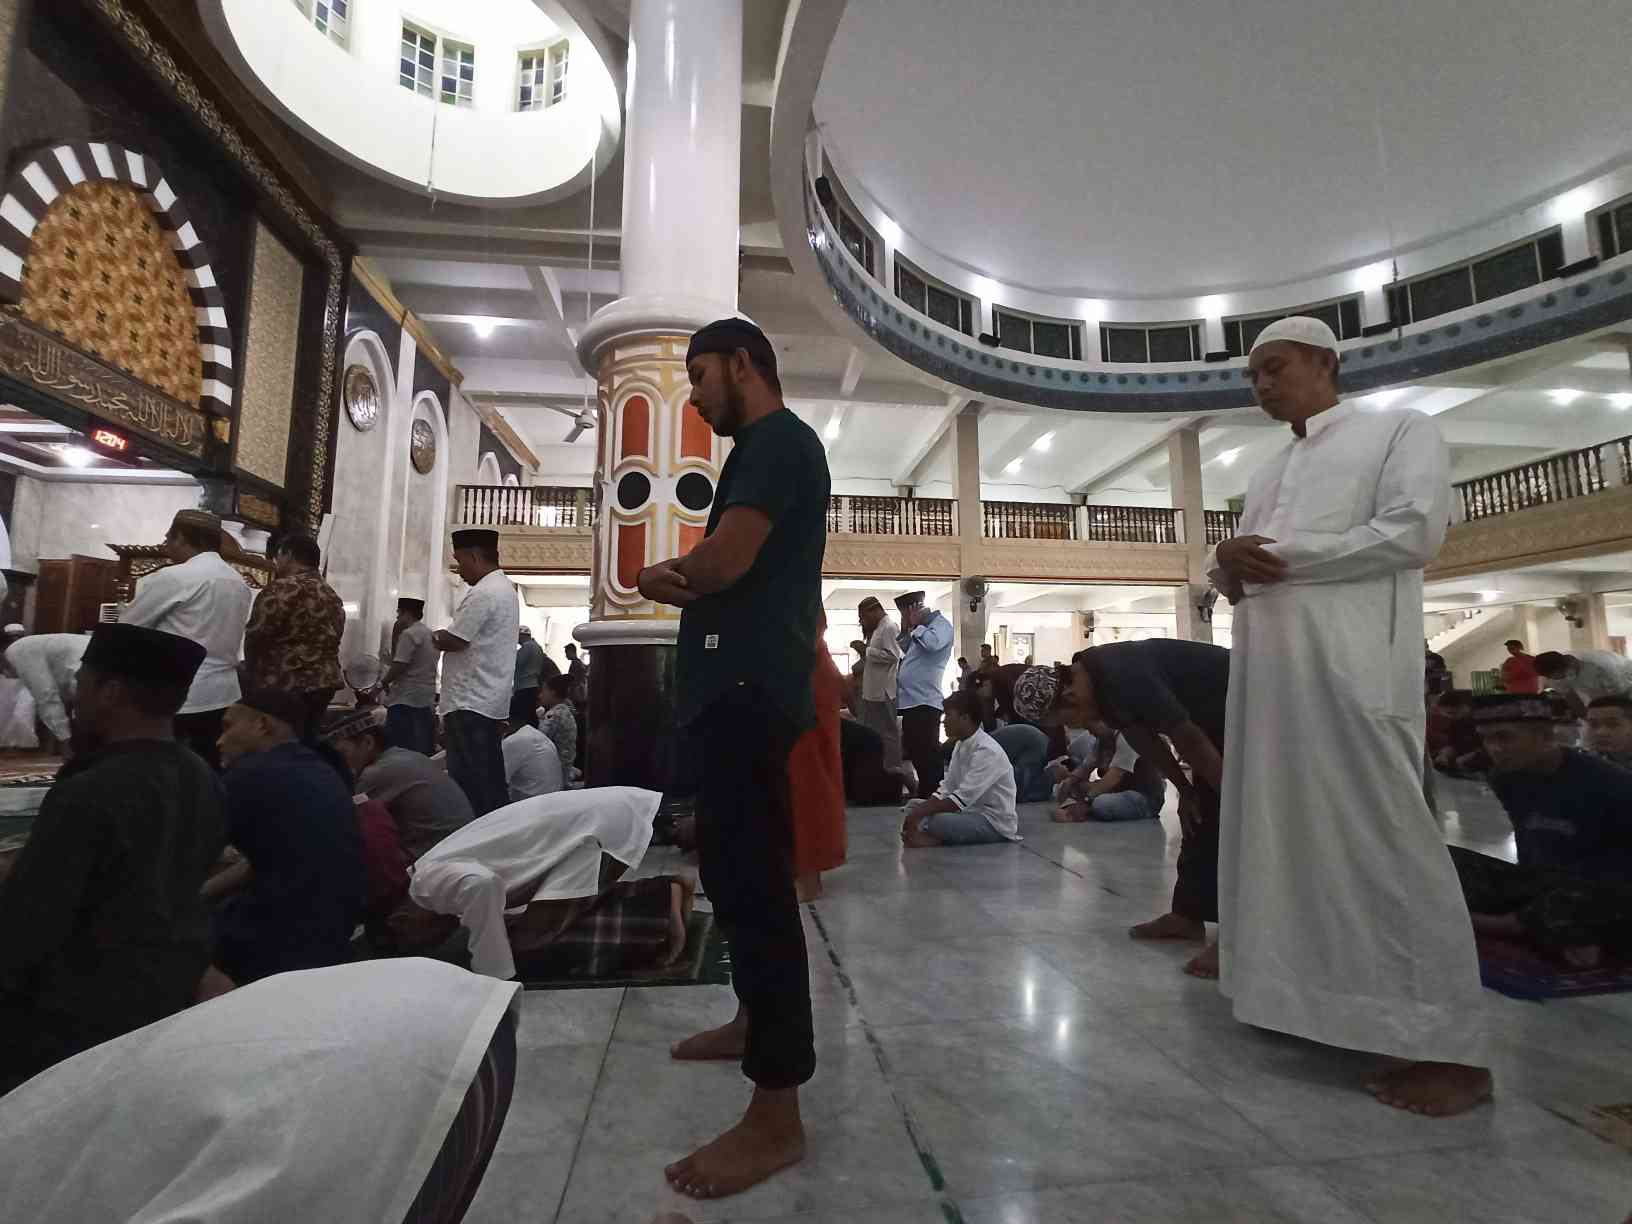 Saldo Masjid